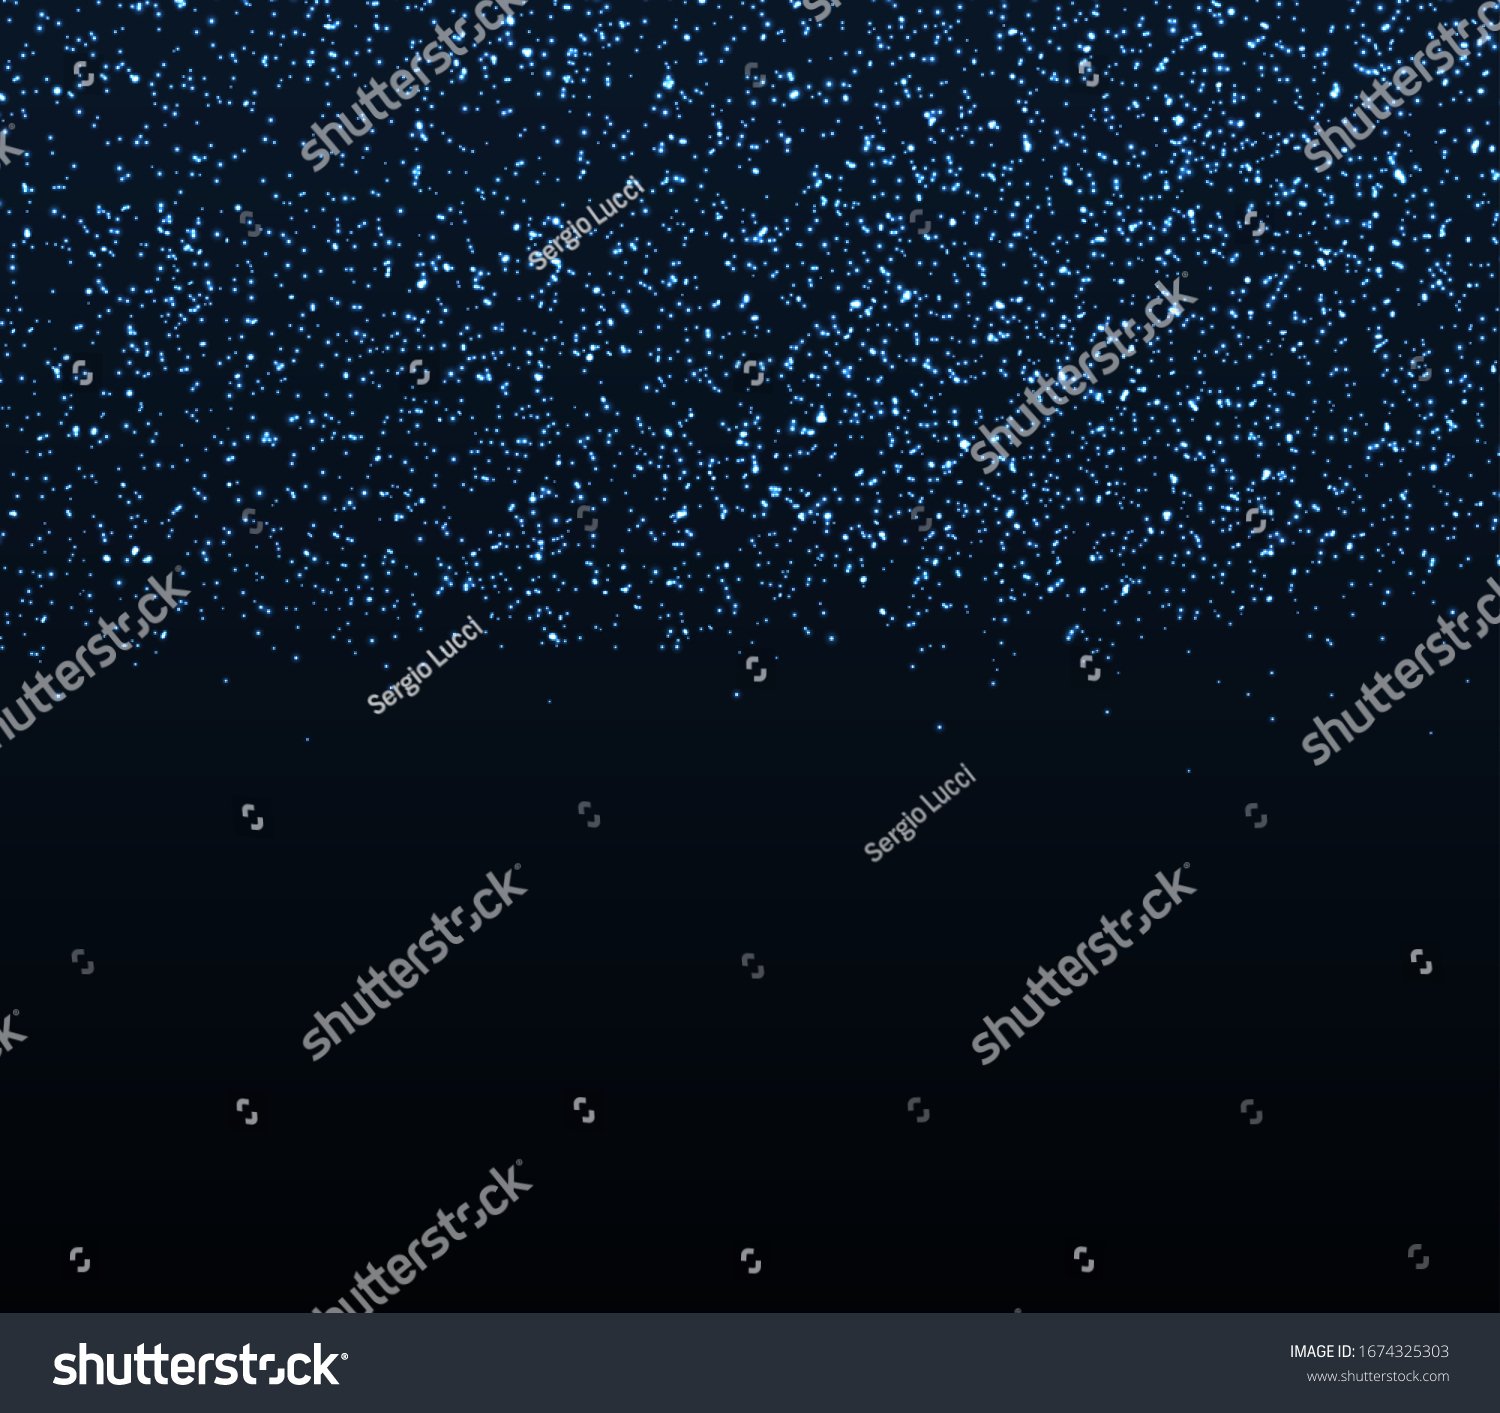 84,001 Blue glitter particles Images, Stock Photos & Vectors | Shutterstock